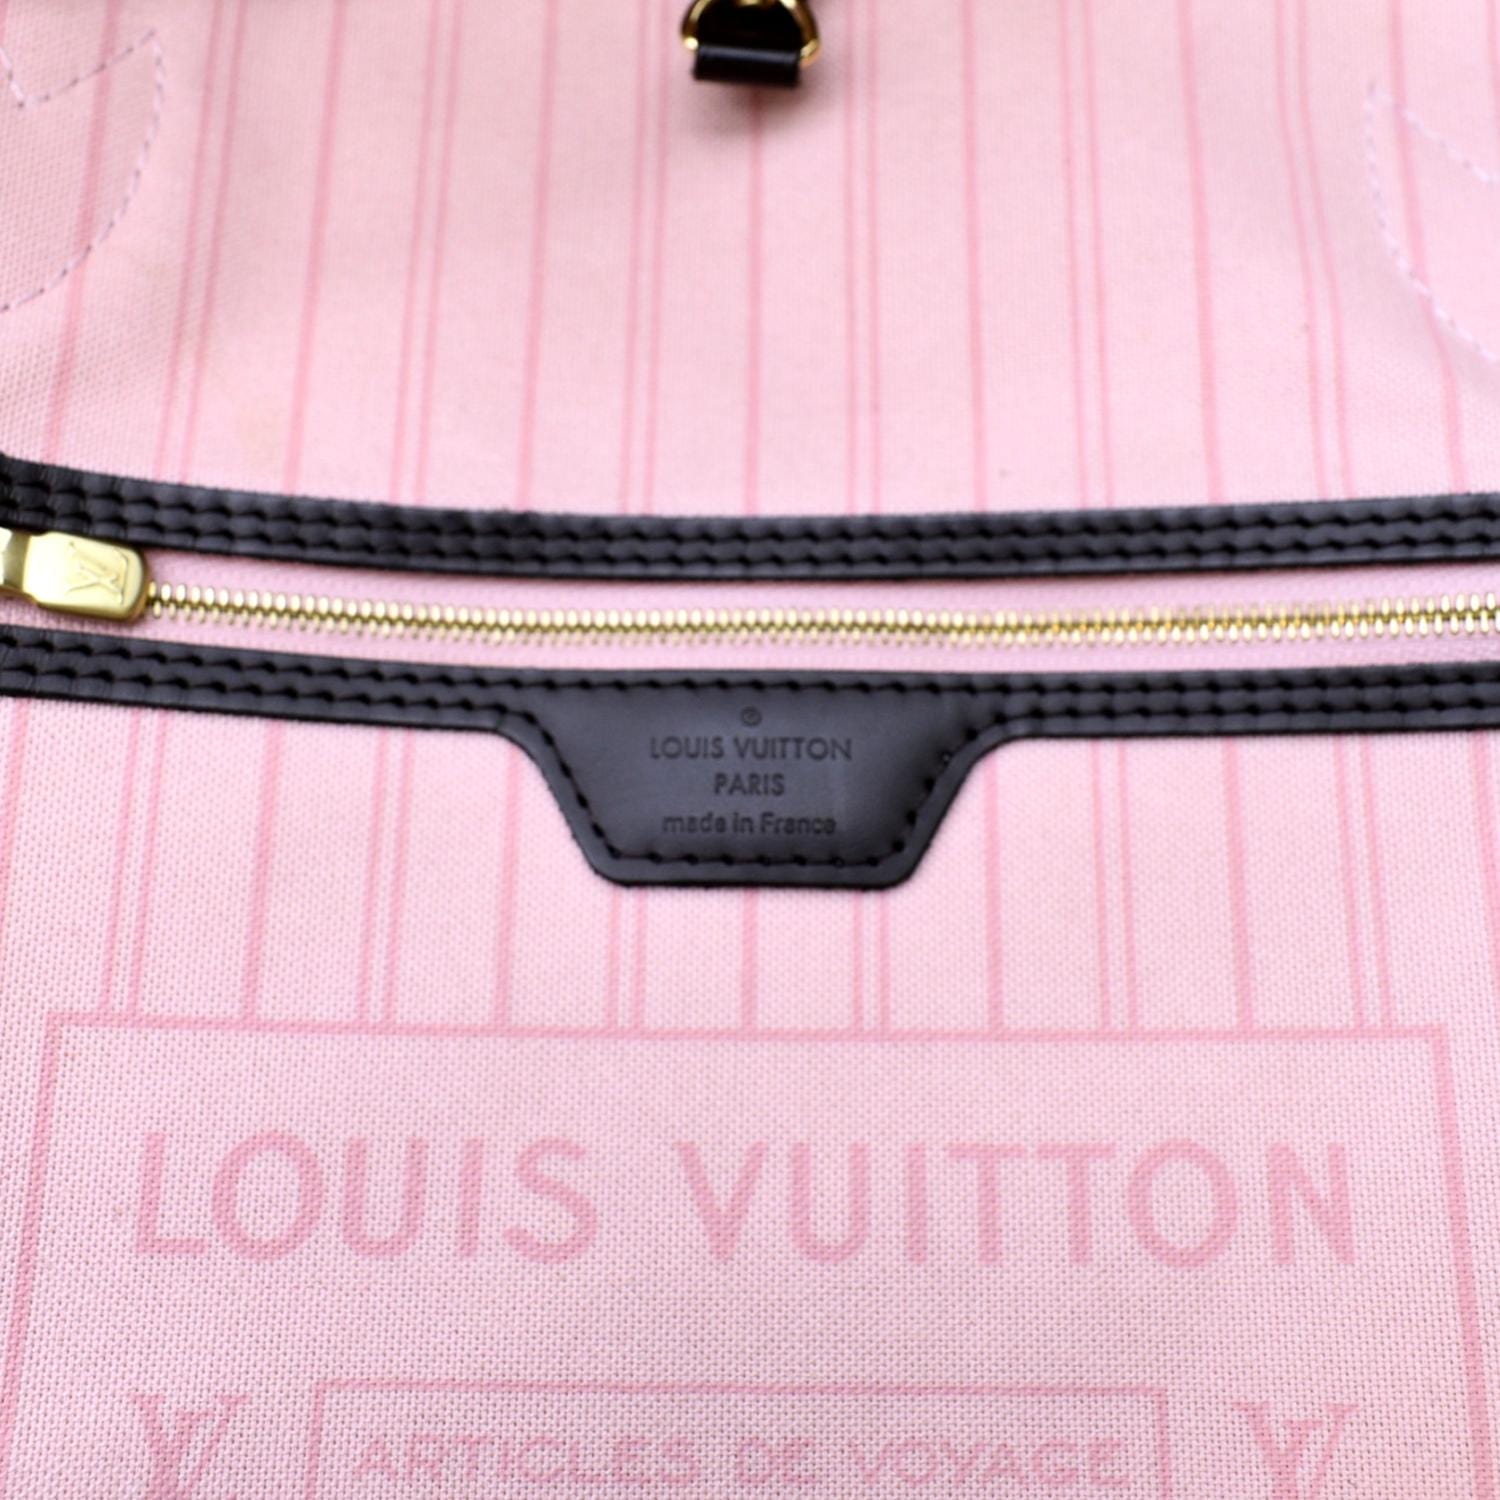 Louis Vuitton Neverfull mm Damier Ebene Tote Bag